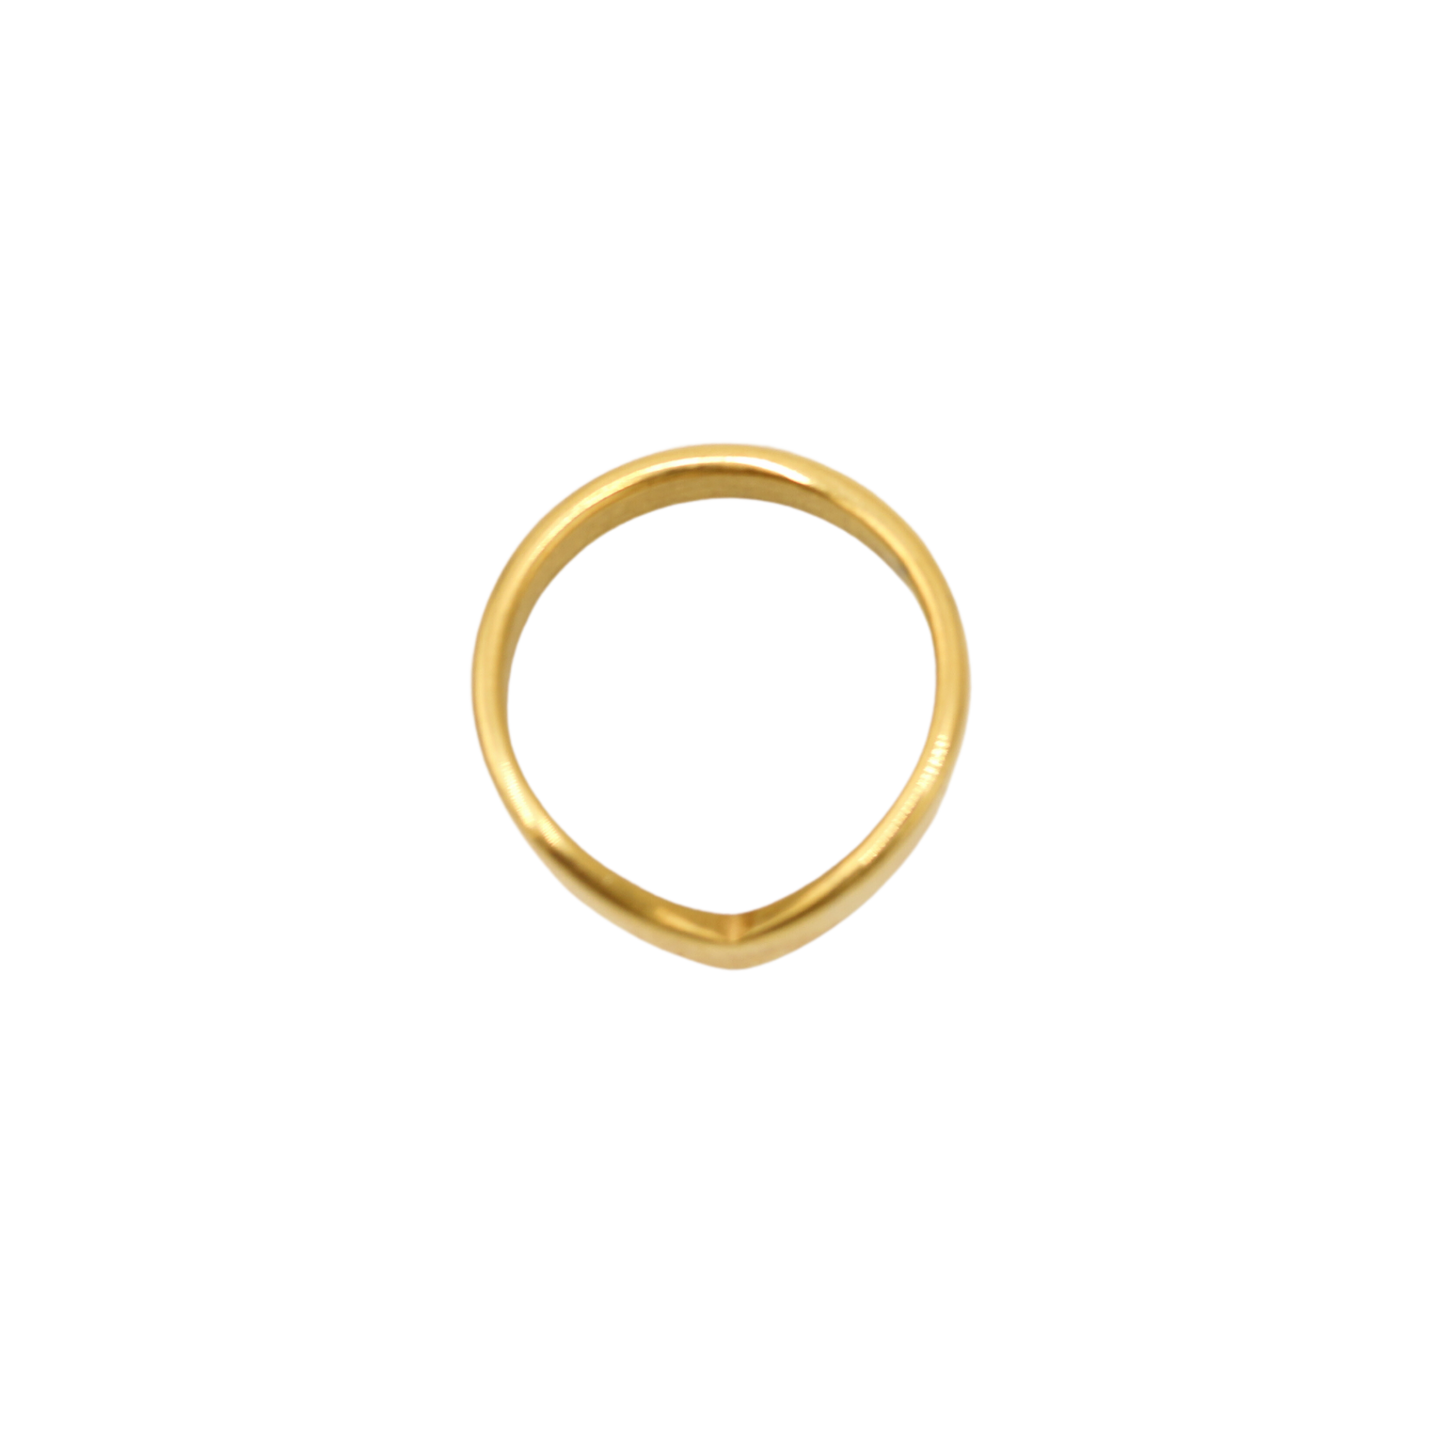 V-Shaped Ring Gold